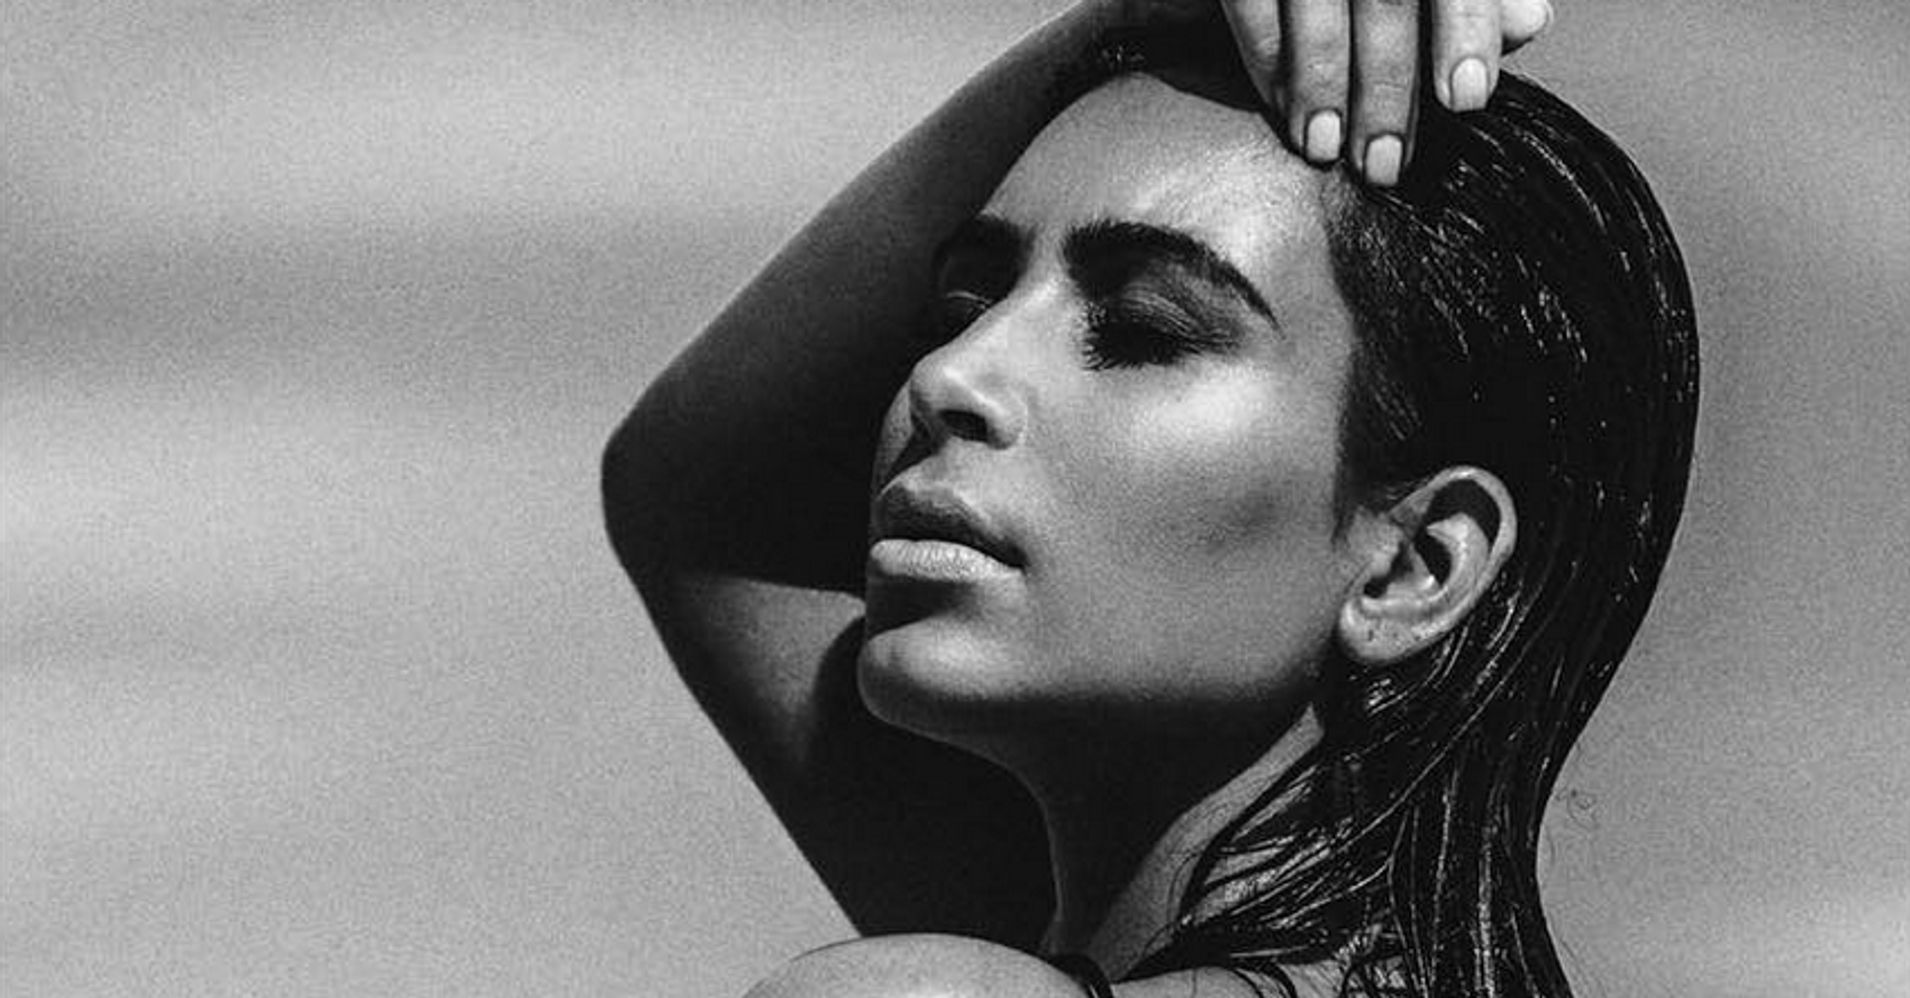 Kim Kardashian Goes Topless For Sultry Magazine Cover Shoot Huffpost